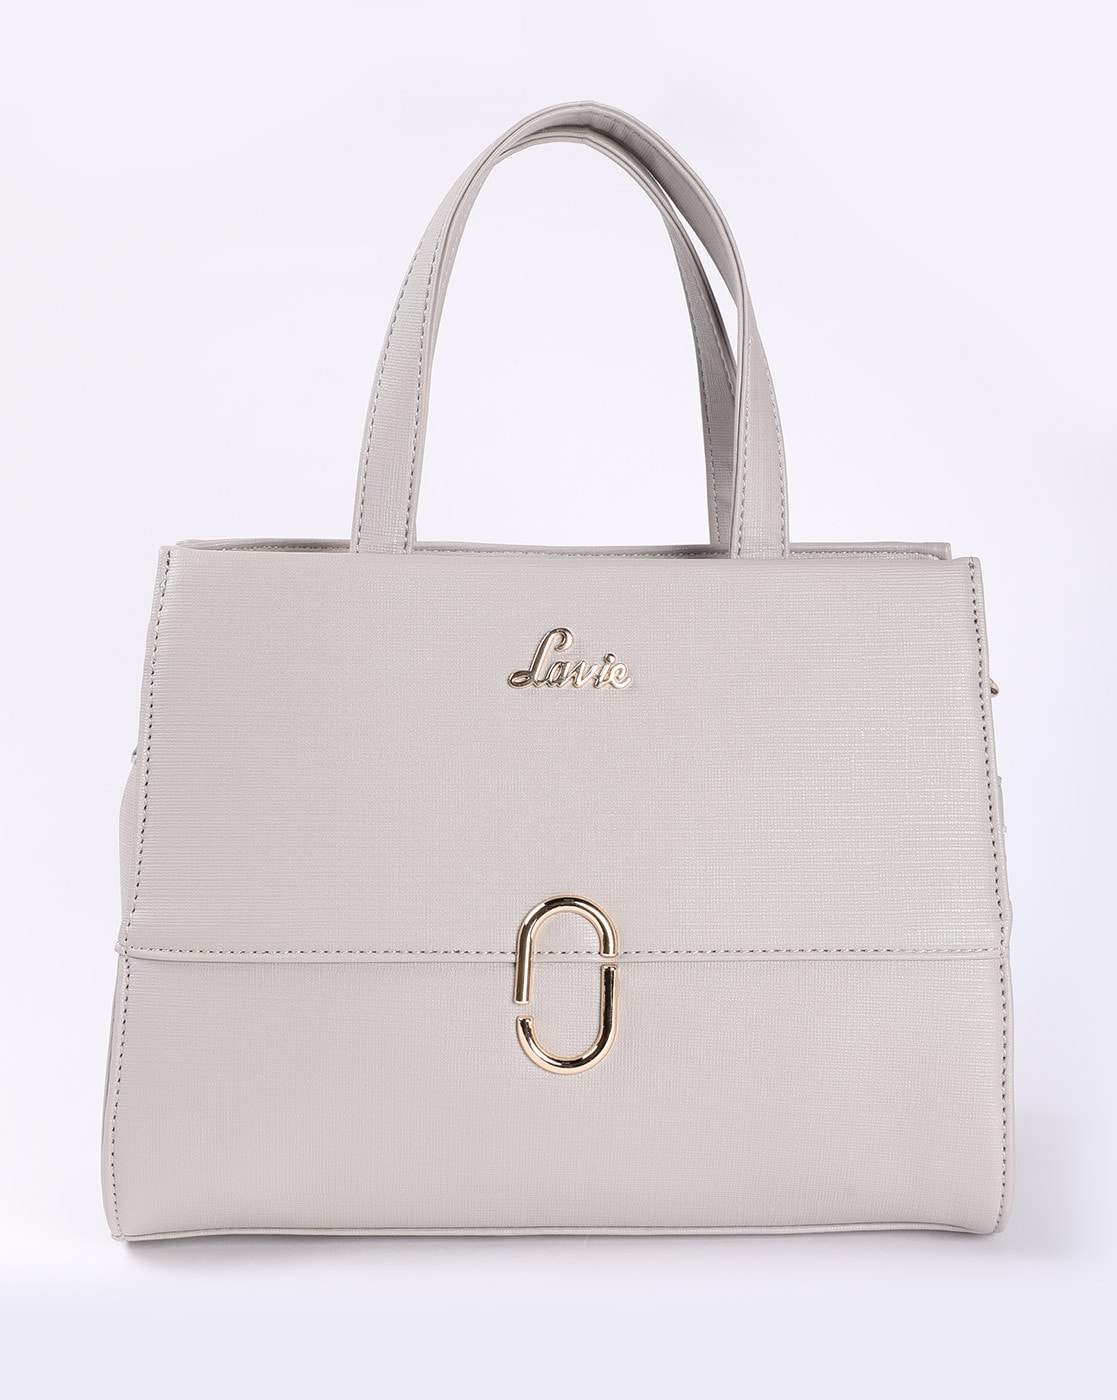 LAVIE Bags & Handbags sale - discounted price | FASHIOLA INDIA